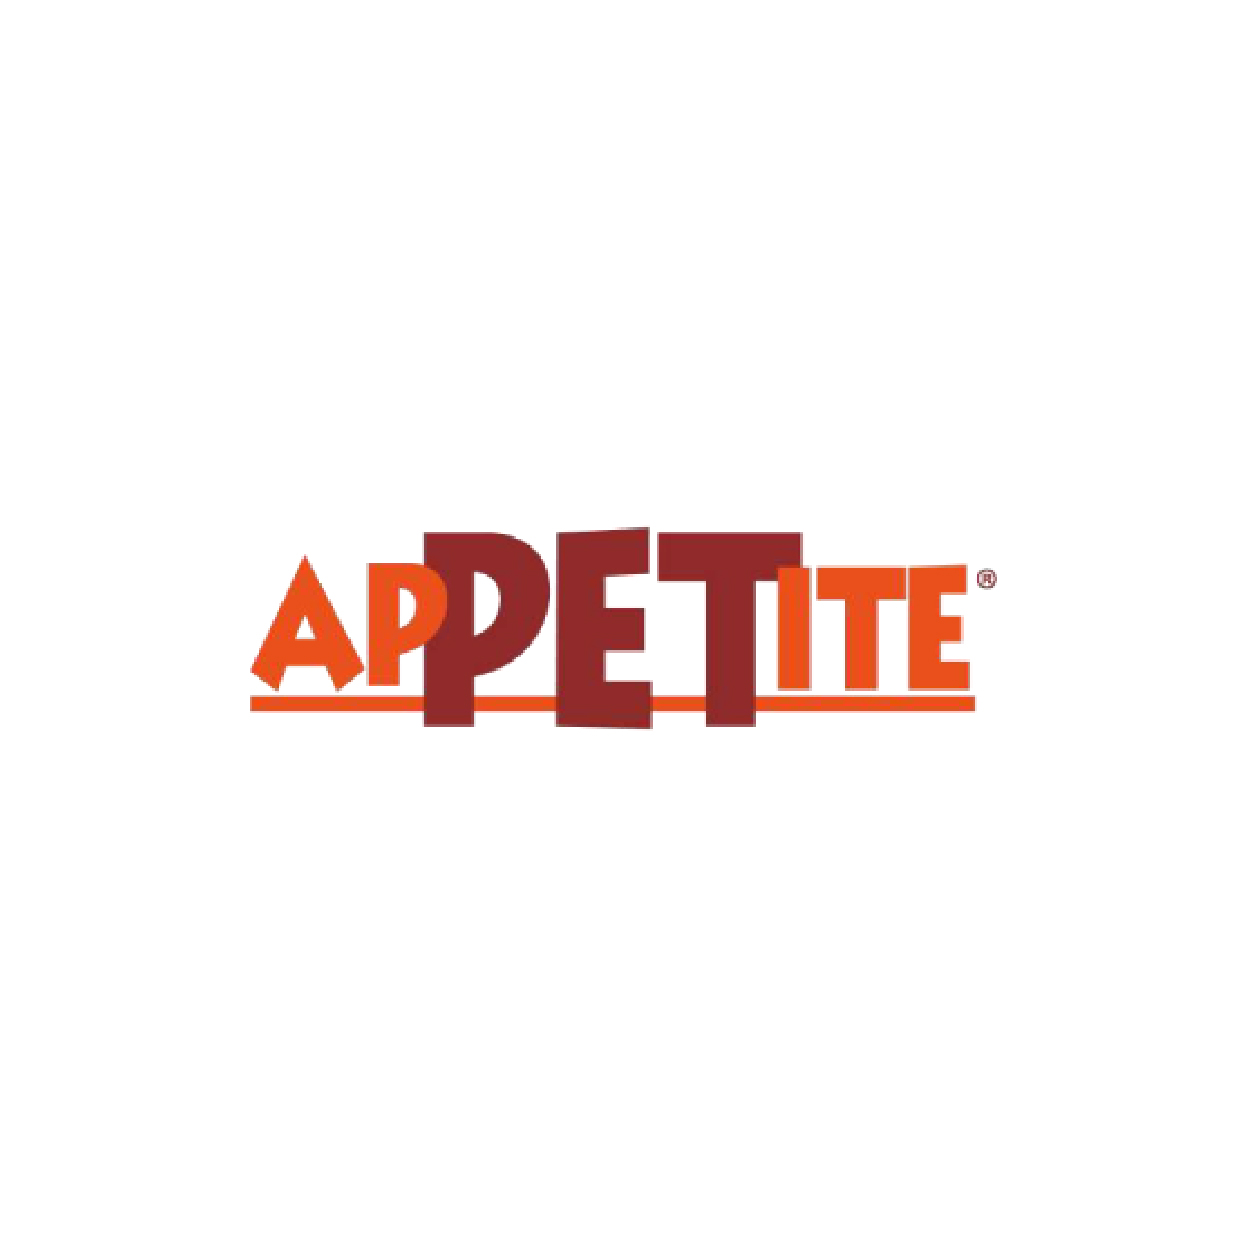 PM appetite logo